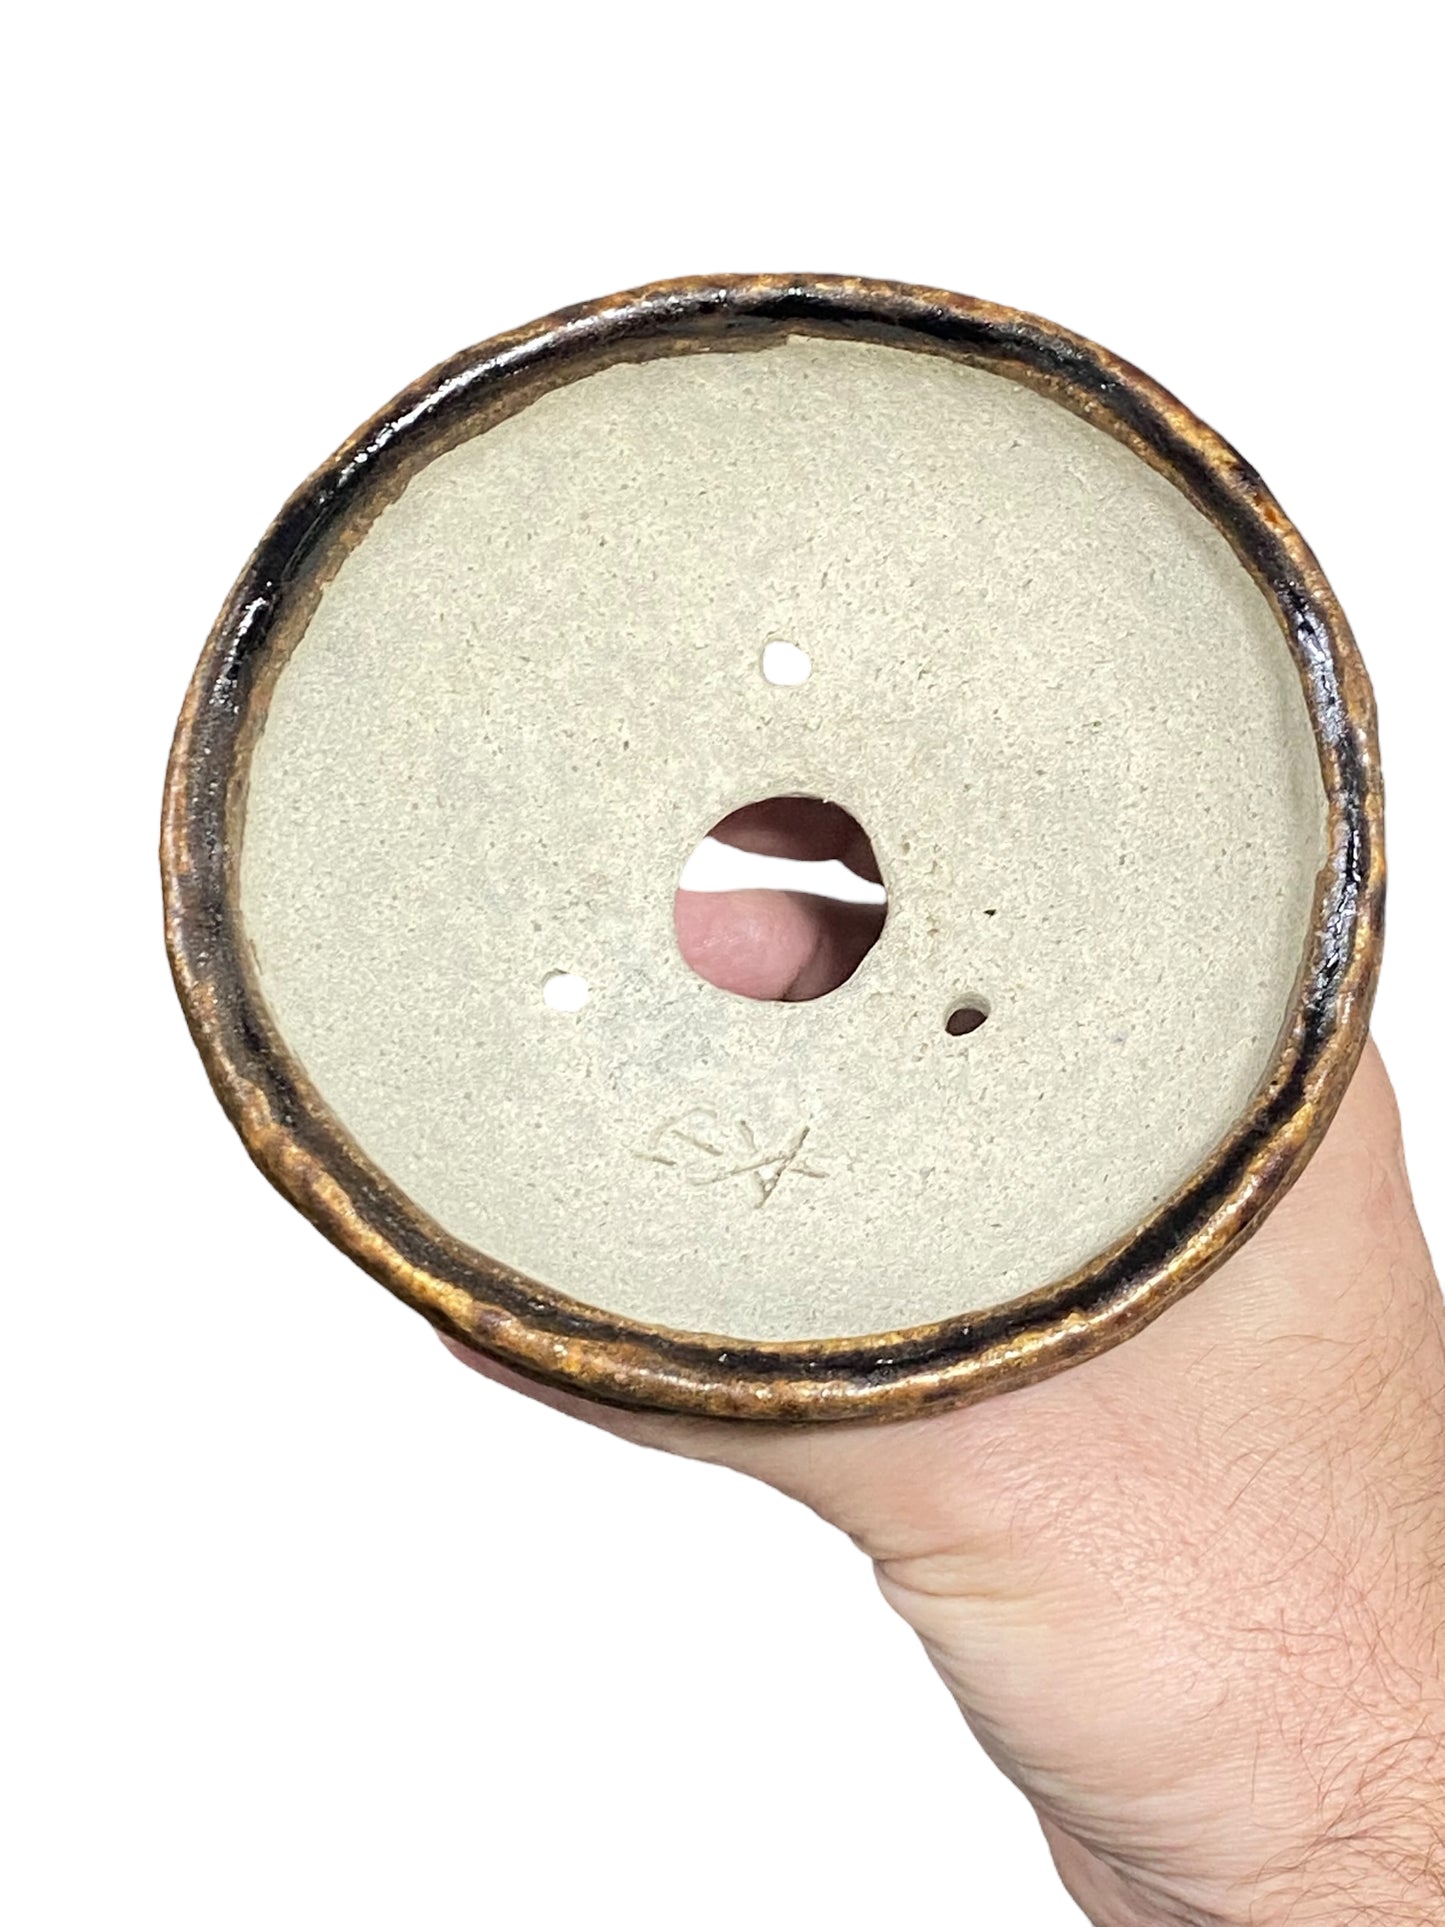 Bunzan - Glazed Footed Shallow Bowl Bonsai or Accent Pot